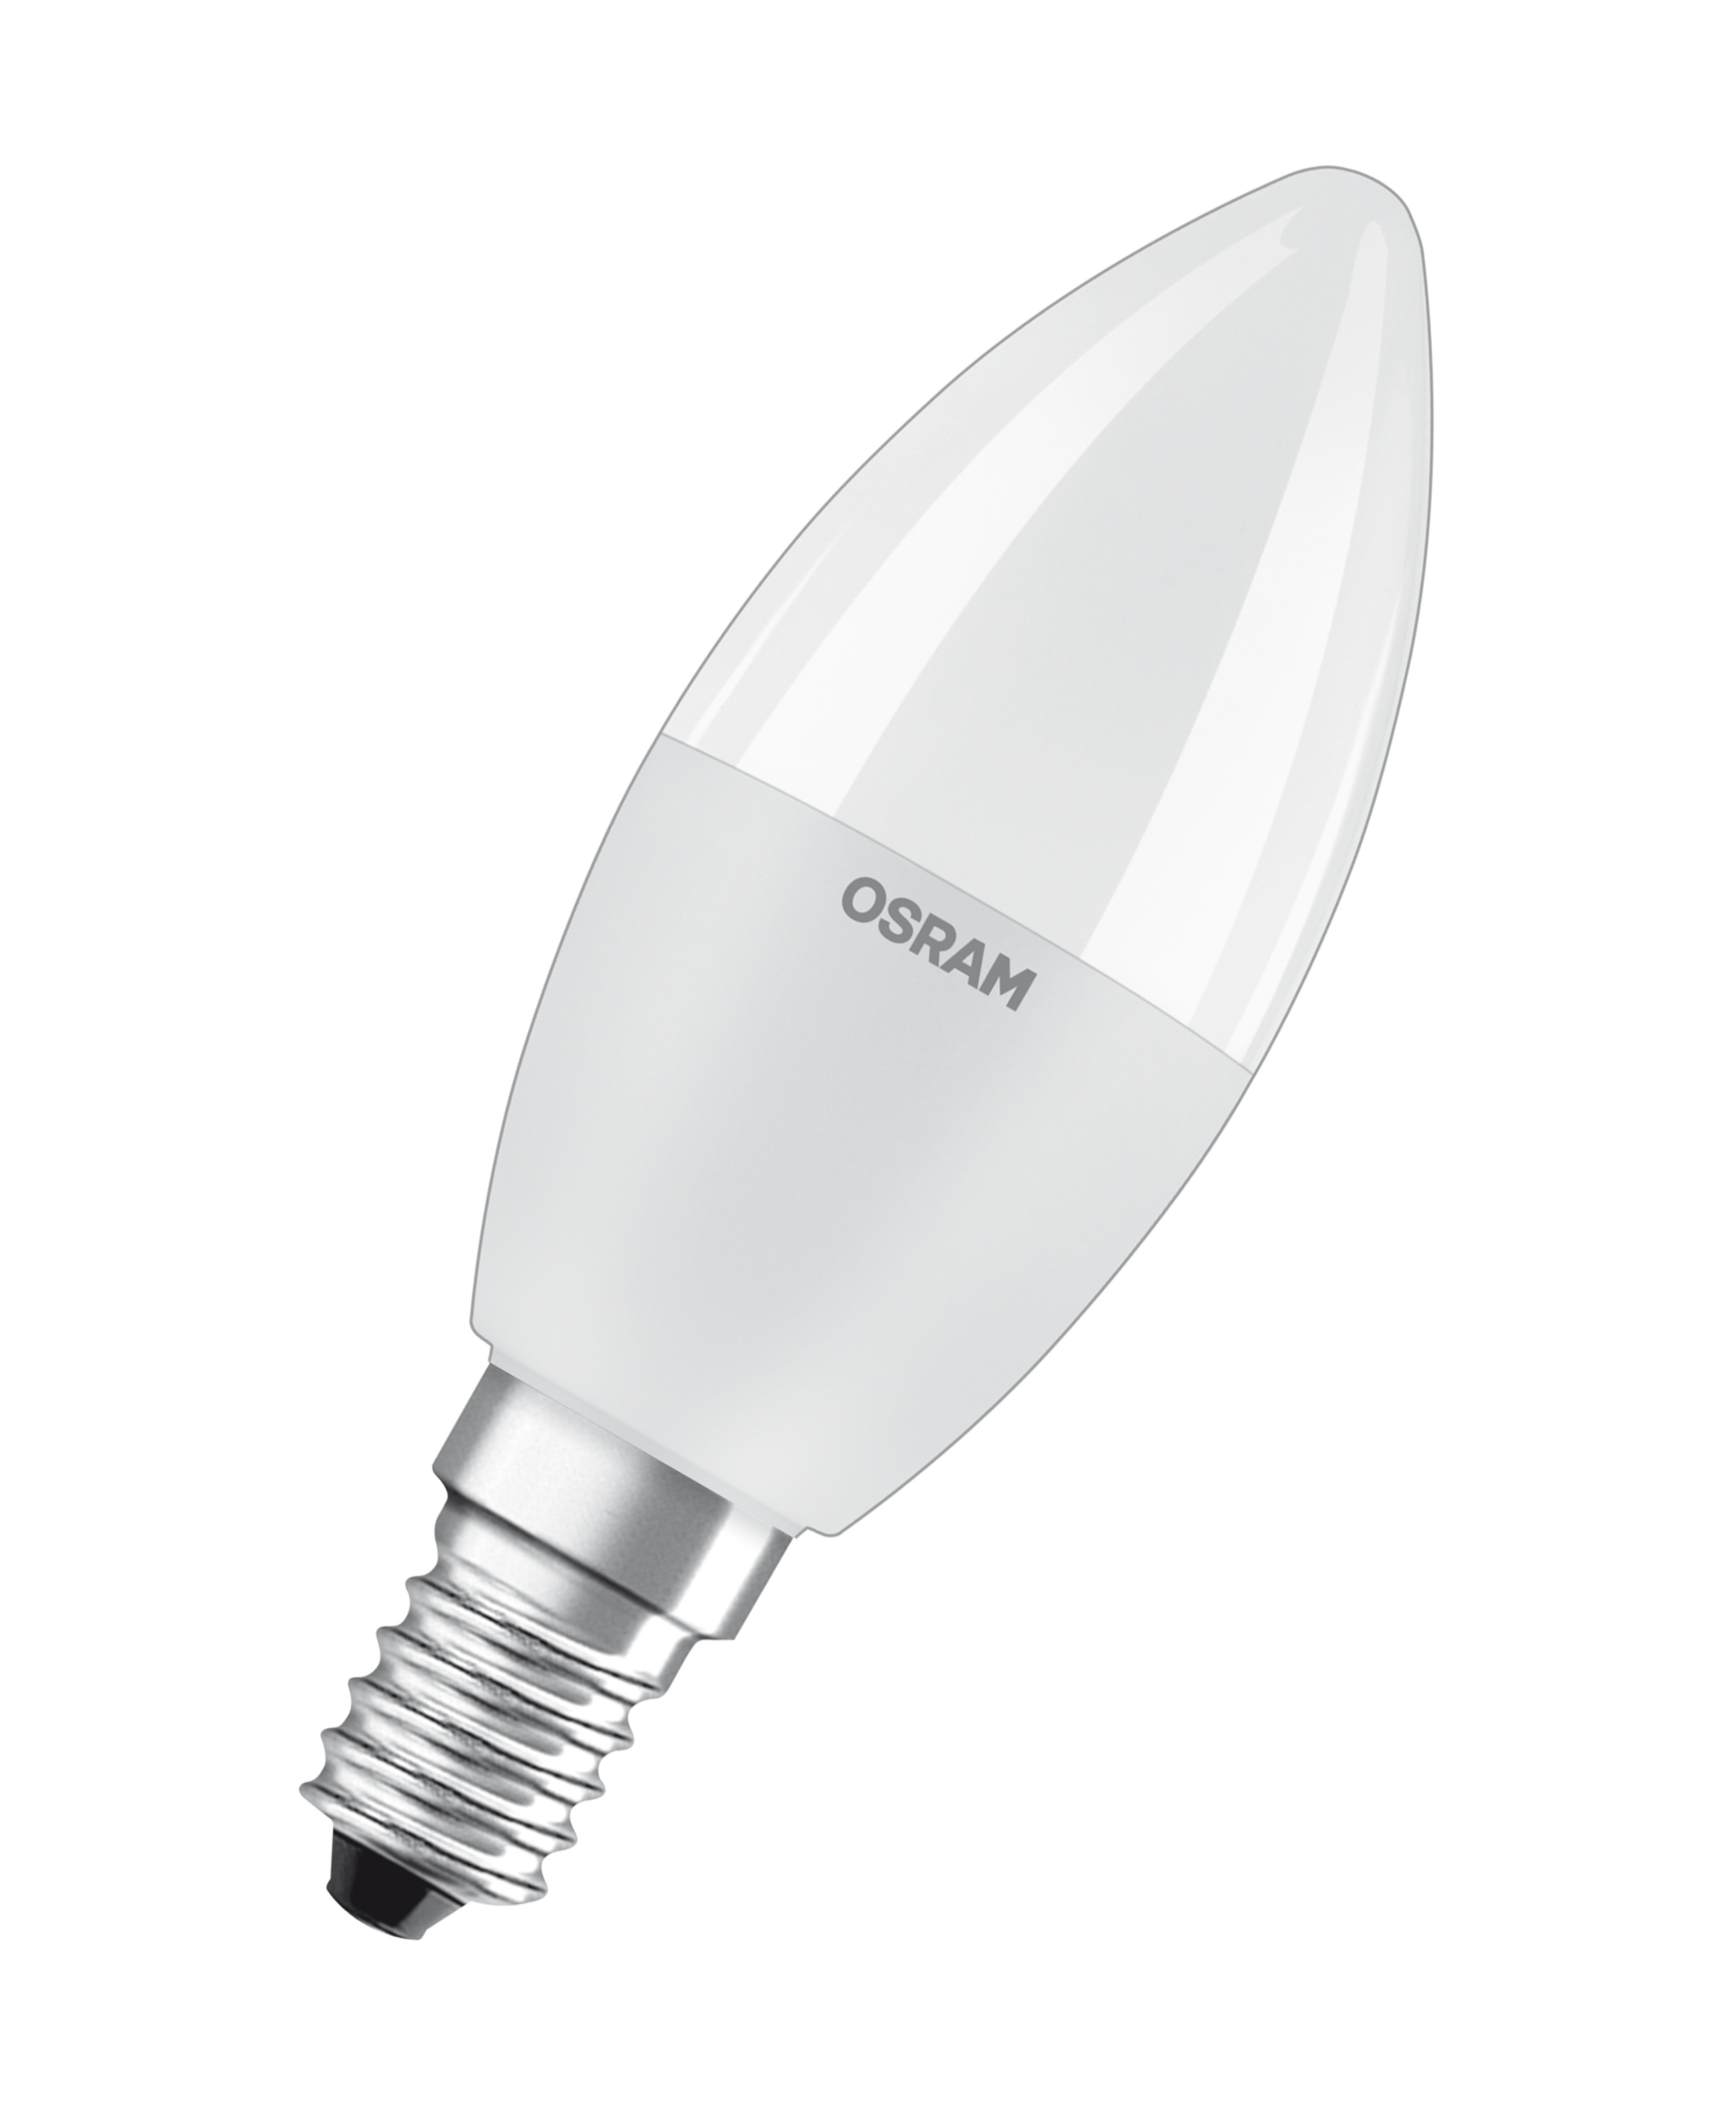 OSRAM  LED Retrofit Lampe control RGBW Warmweiß LED with lumen lamps remote 470